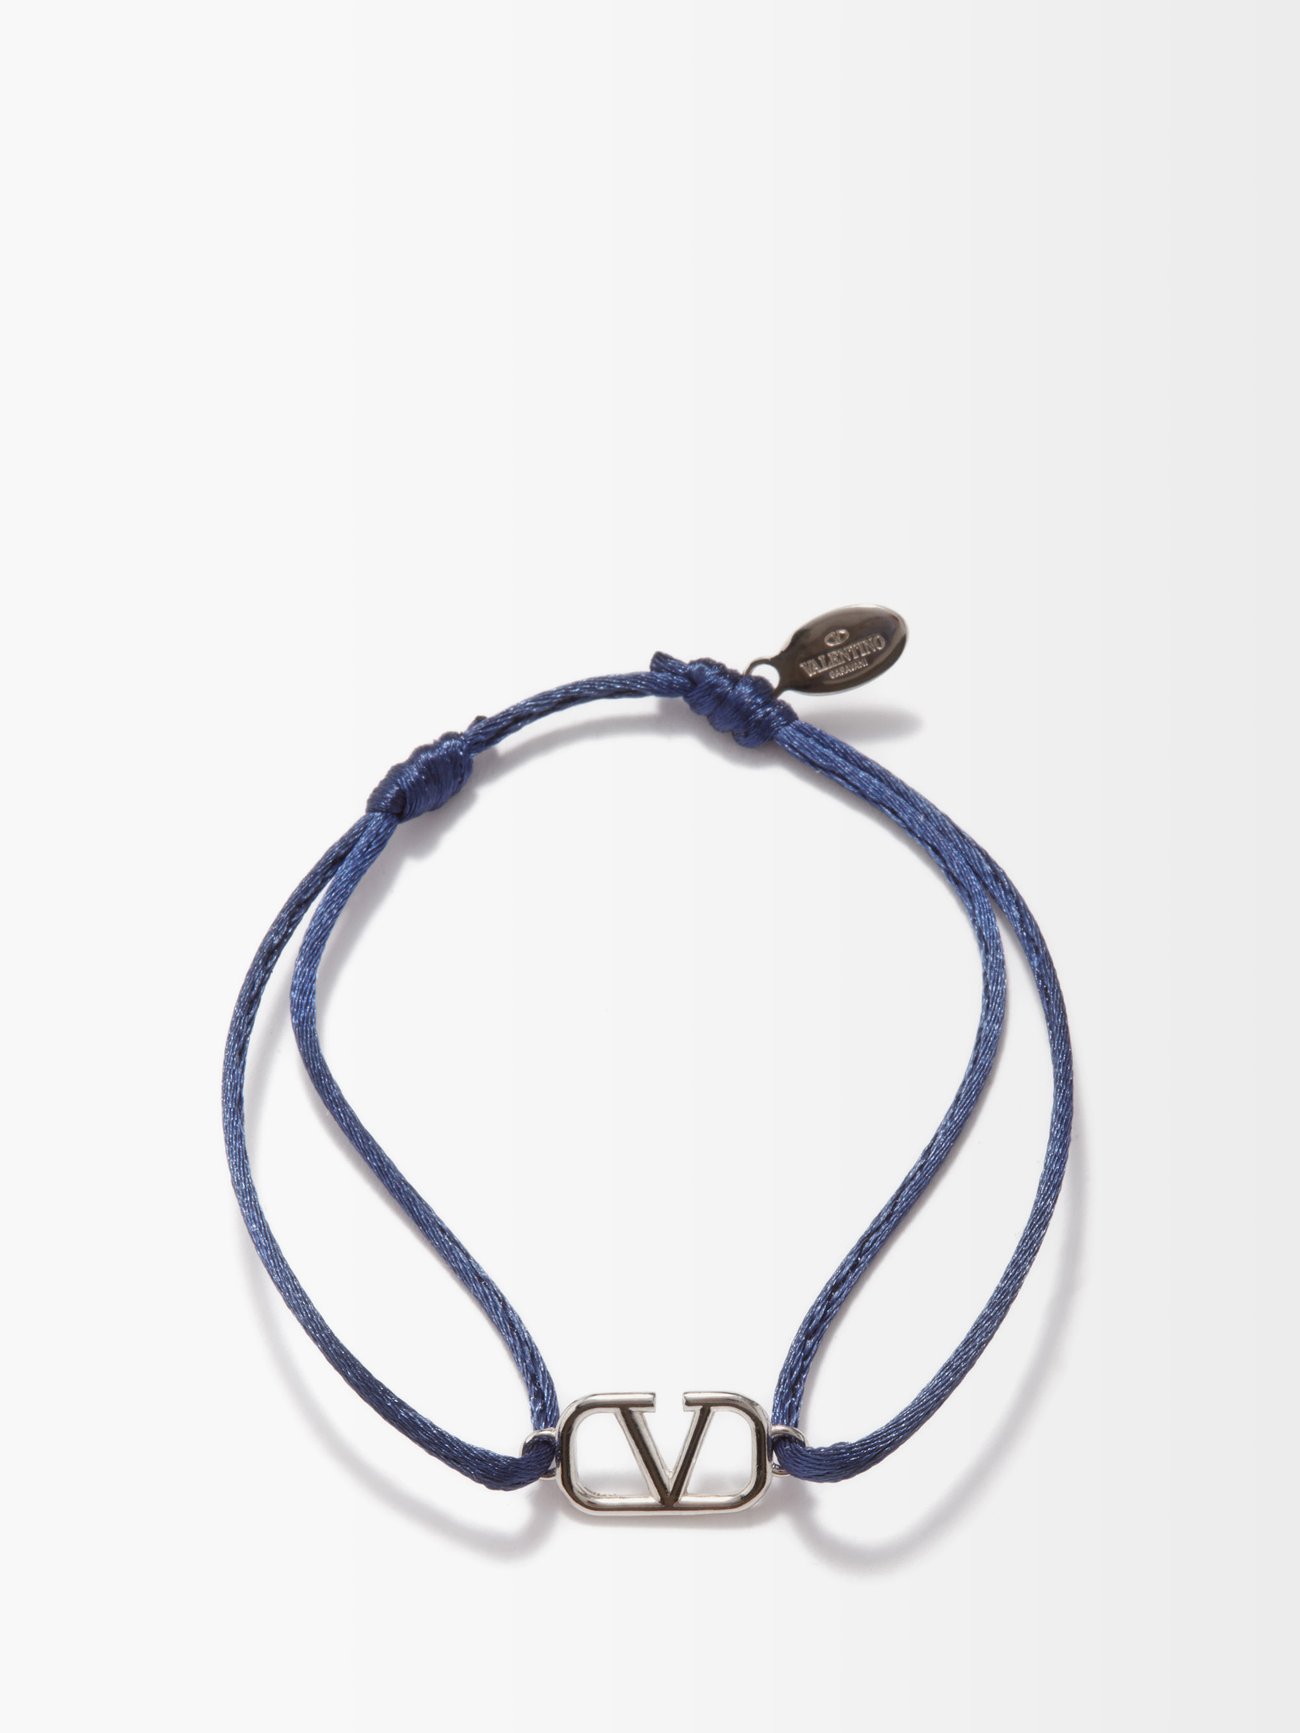 Blue cord bracelet Valentino | MATCHESFASHION